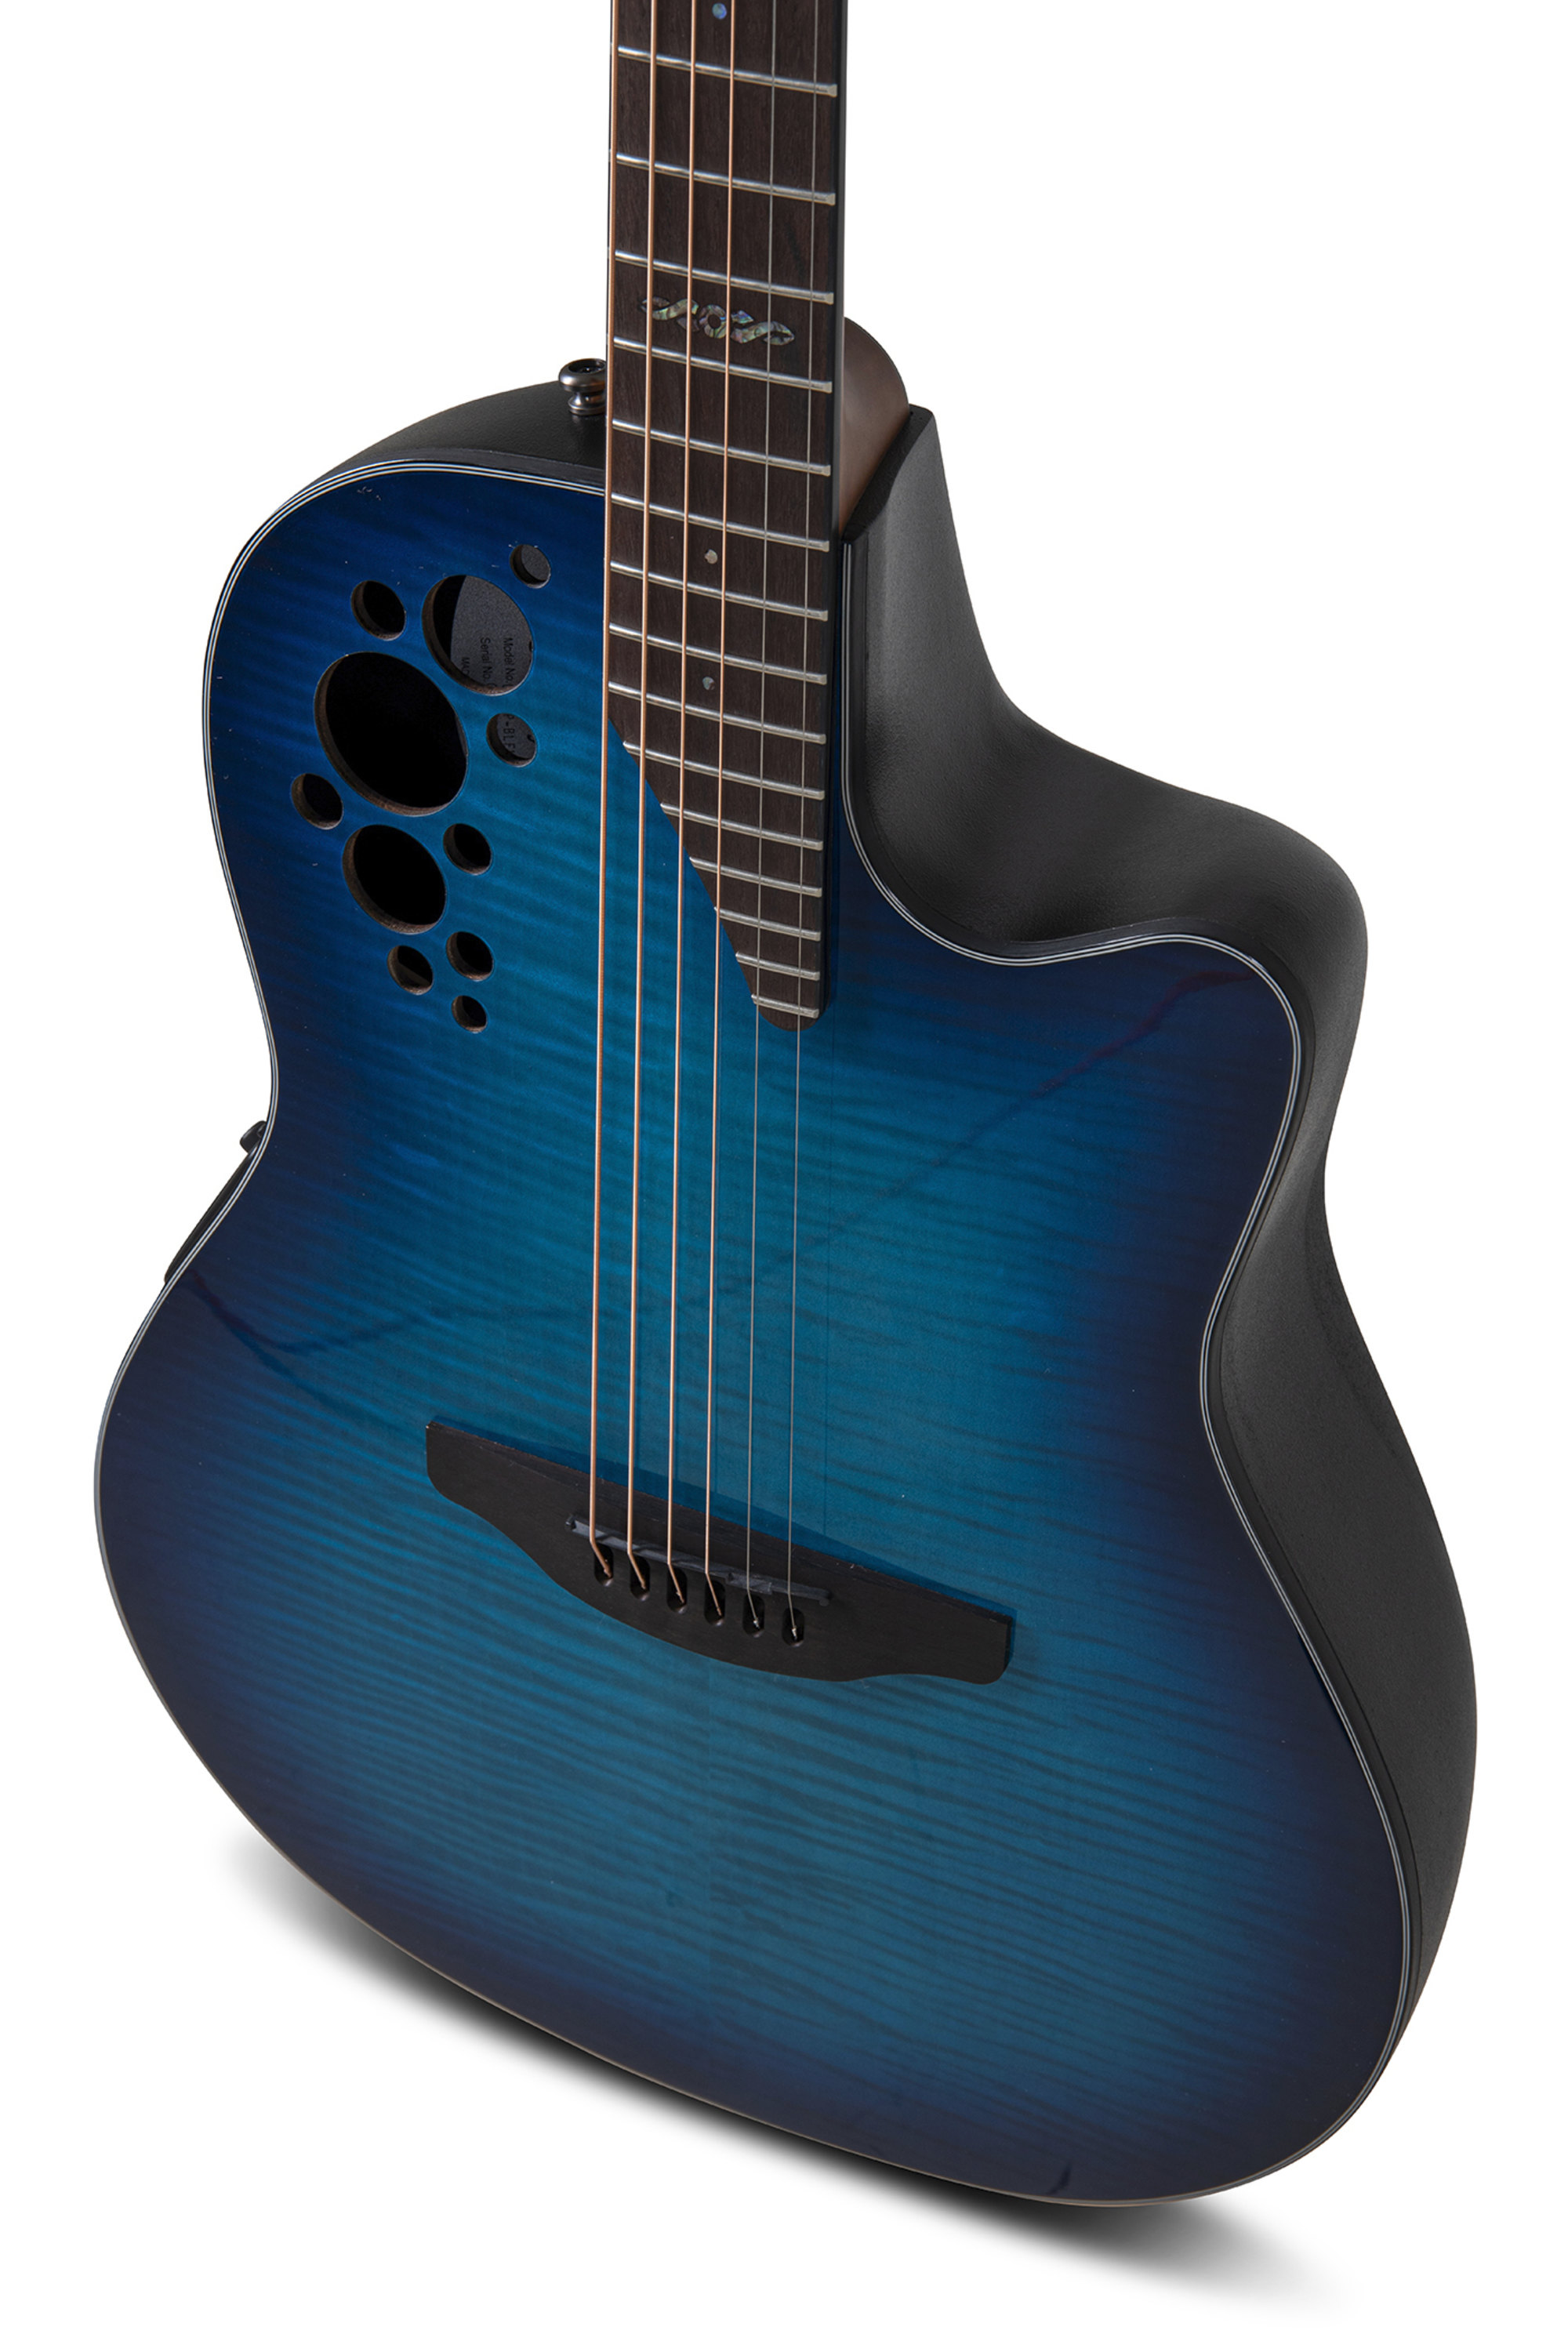 Ovation Ce44p-blfl-g Celebrity Elite Plus Mid Depth Cw Erable Lyrachord Rw - Blue Flamed Maple - Electro acoustic guitar - Variation 5